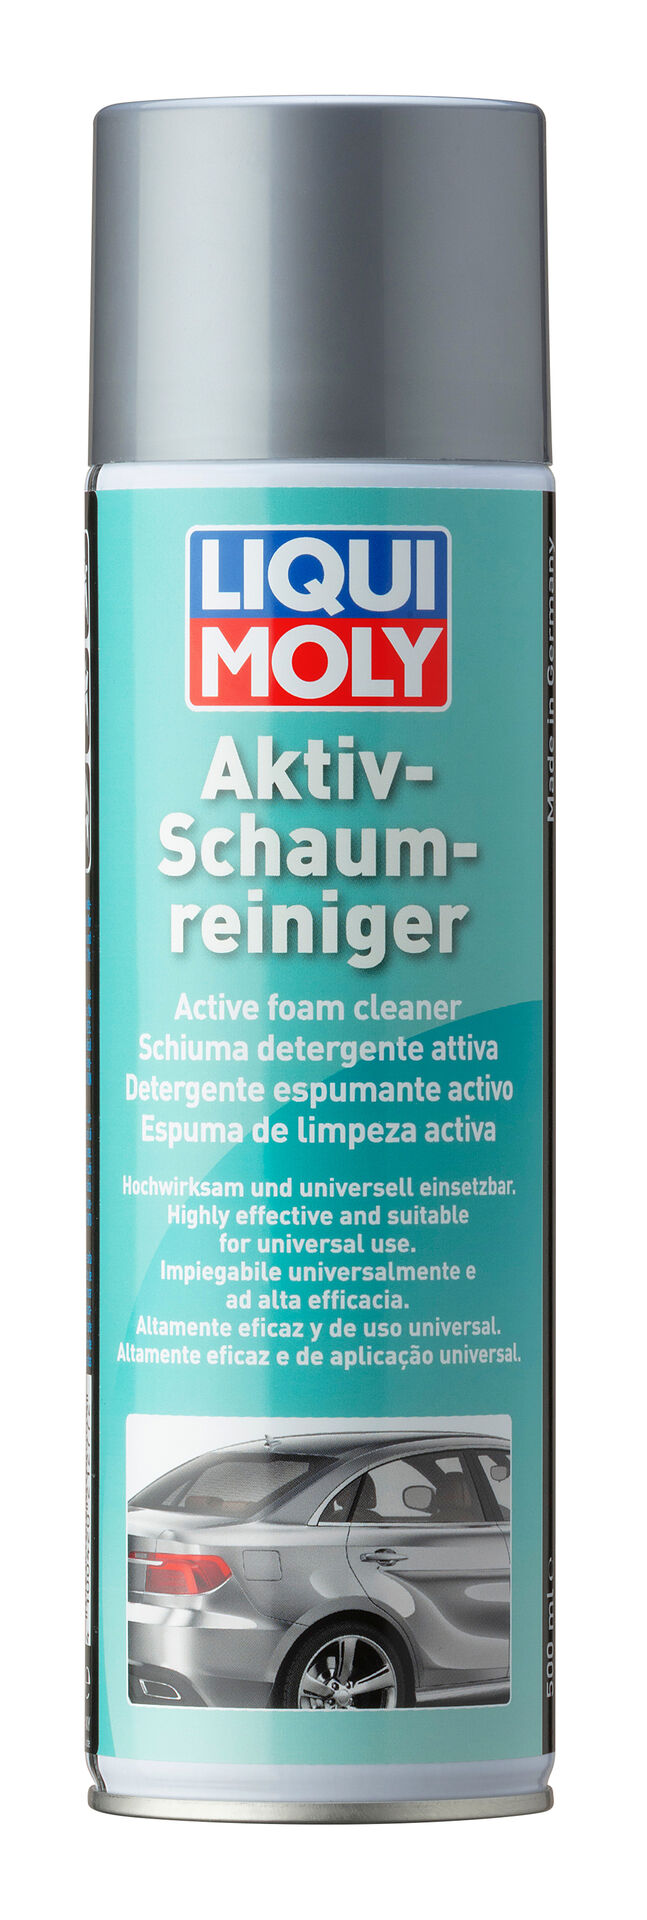 Rat-Ban Spray 200ml - Liqui Moly